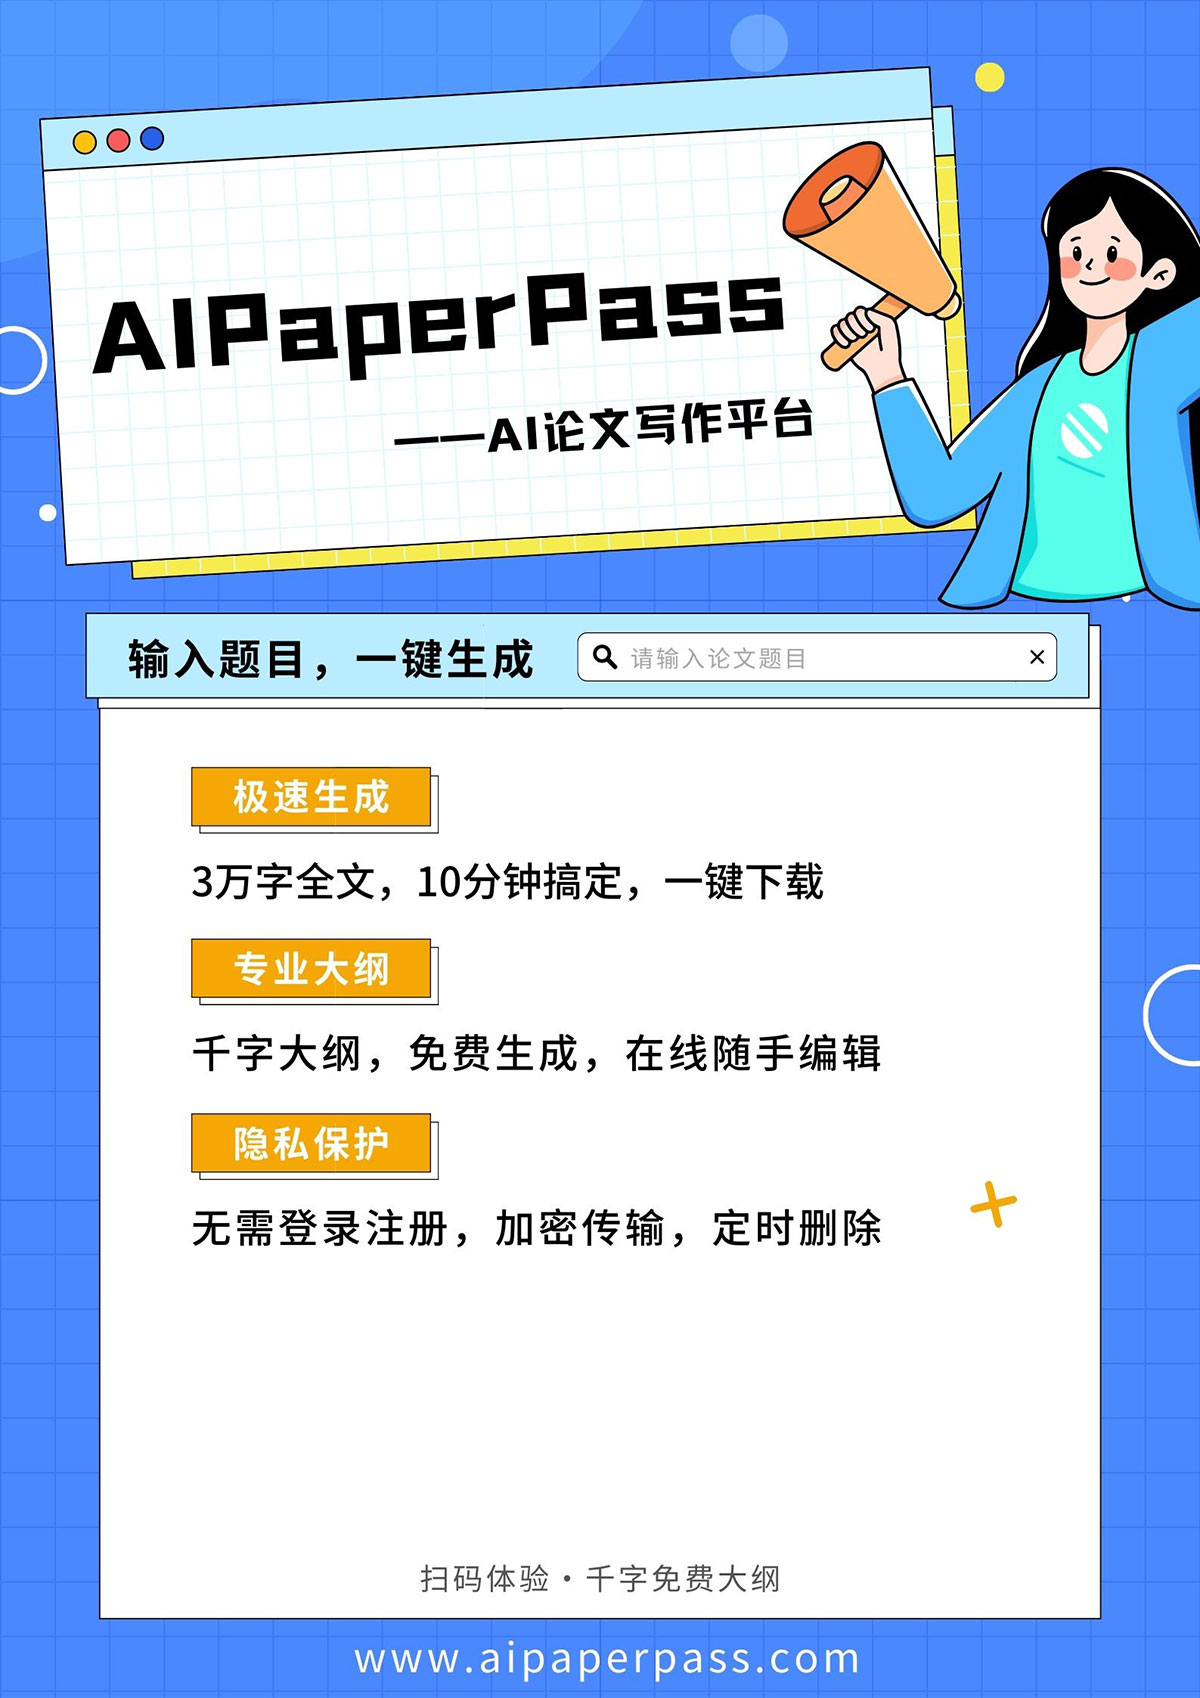 AIPaperPass